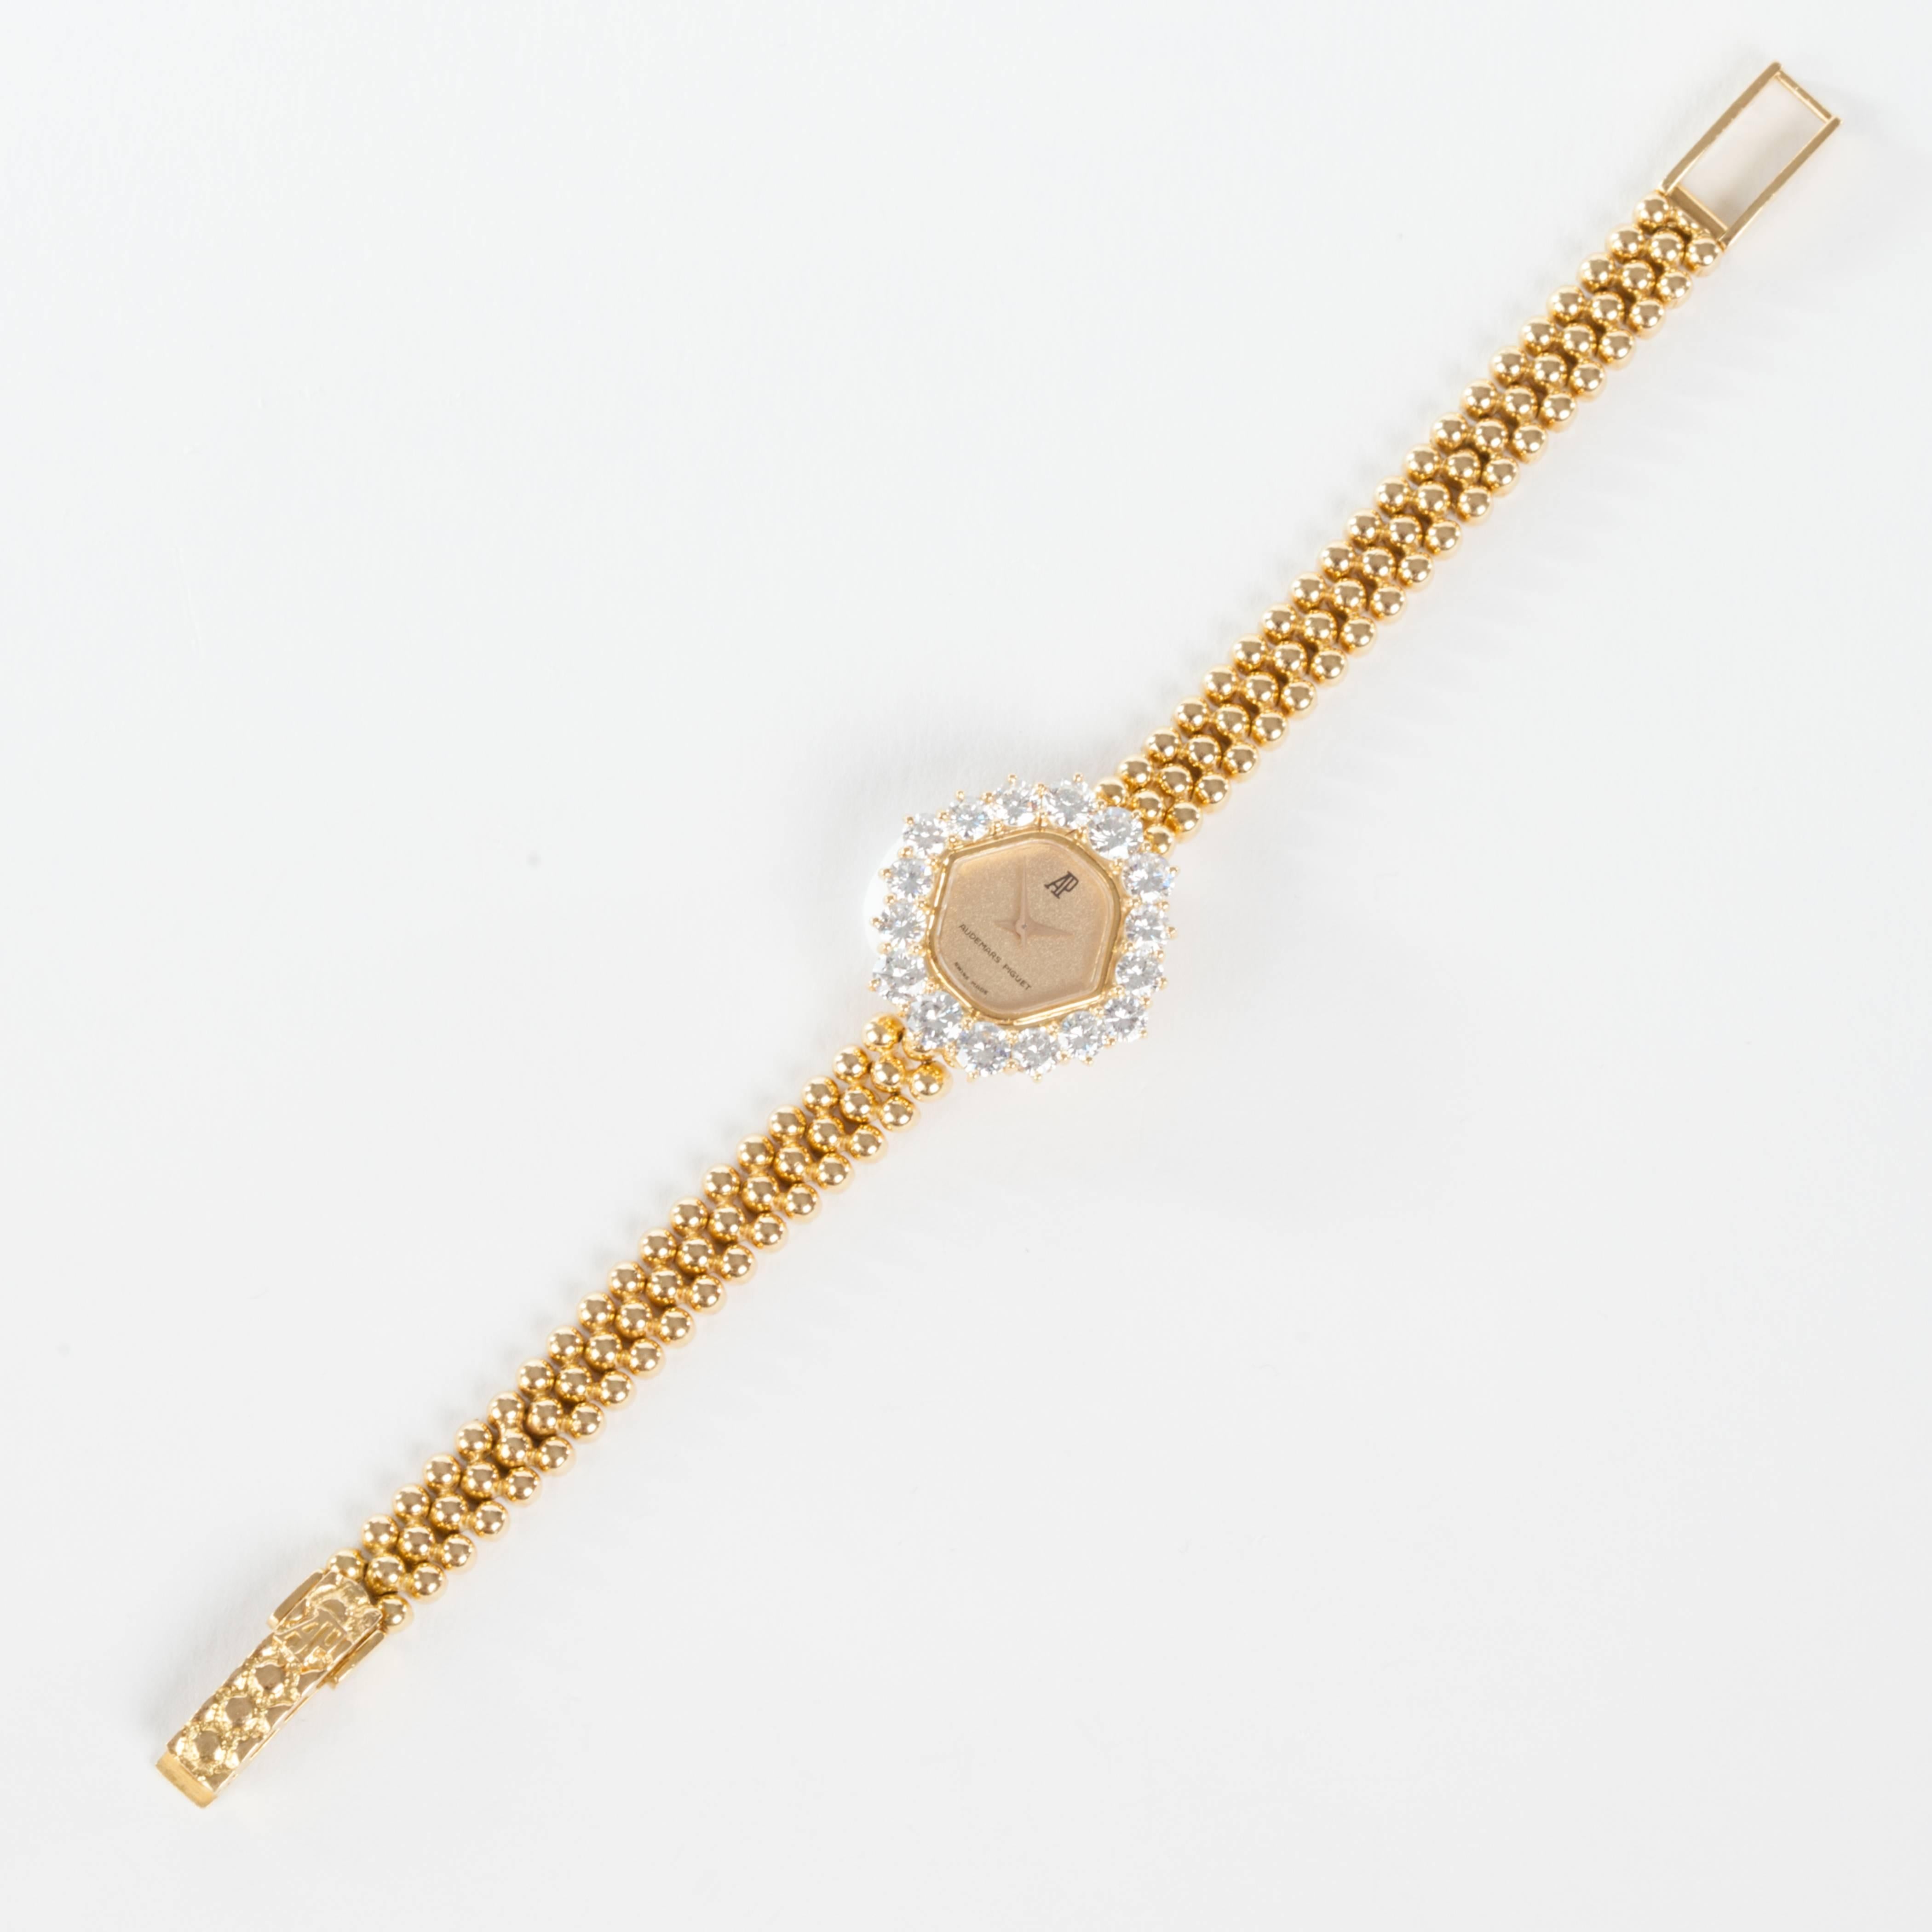 very nice yellow gold  diamond Audemars Piguet wristwatch.
16 diamonds 0,30centieme each around it
serial number /01316
circa 1970